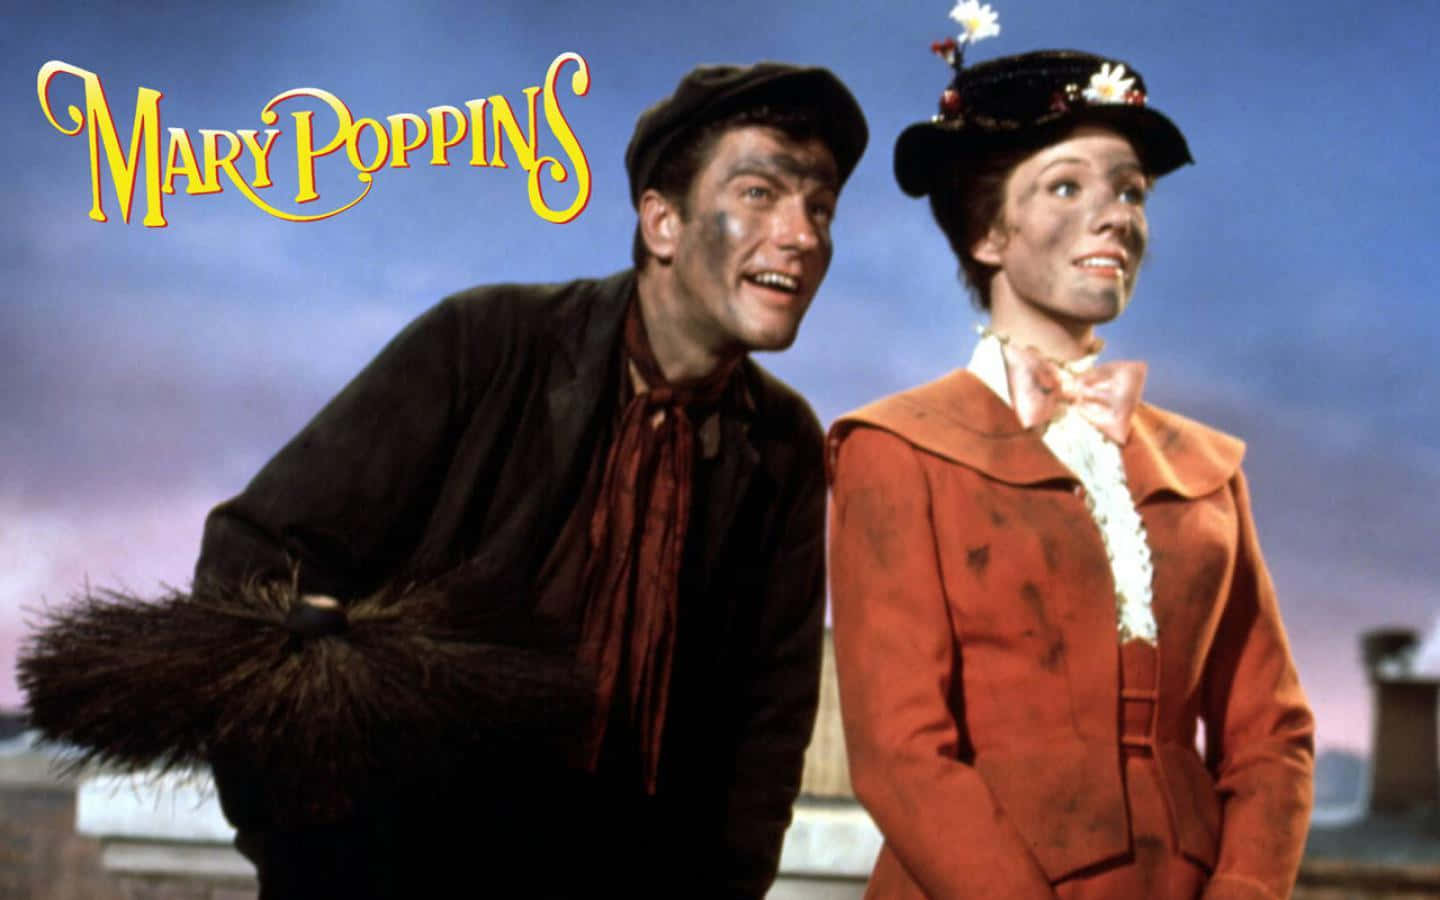 Mary Poppins Spreading Magic In The Sky